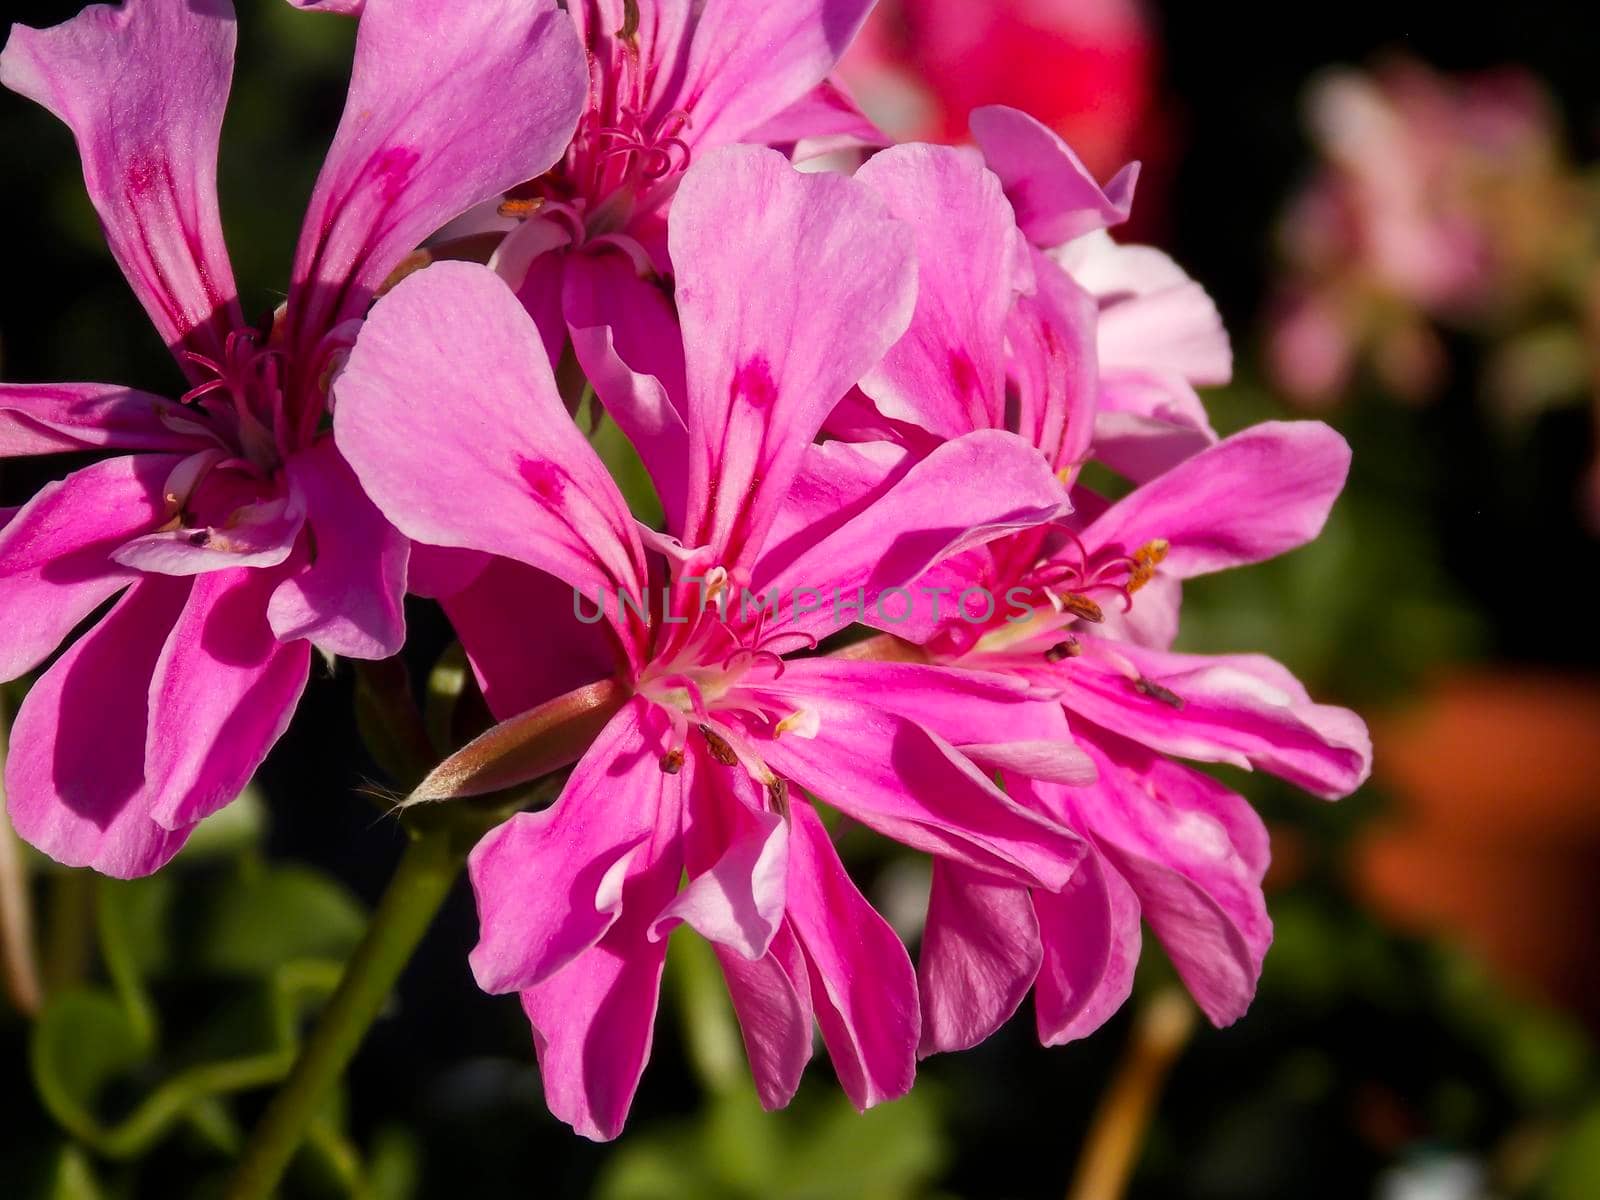 Pink Ivyleaf Geranium Close Up by swissChard7